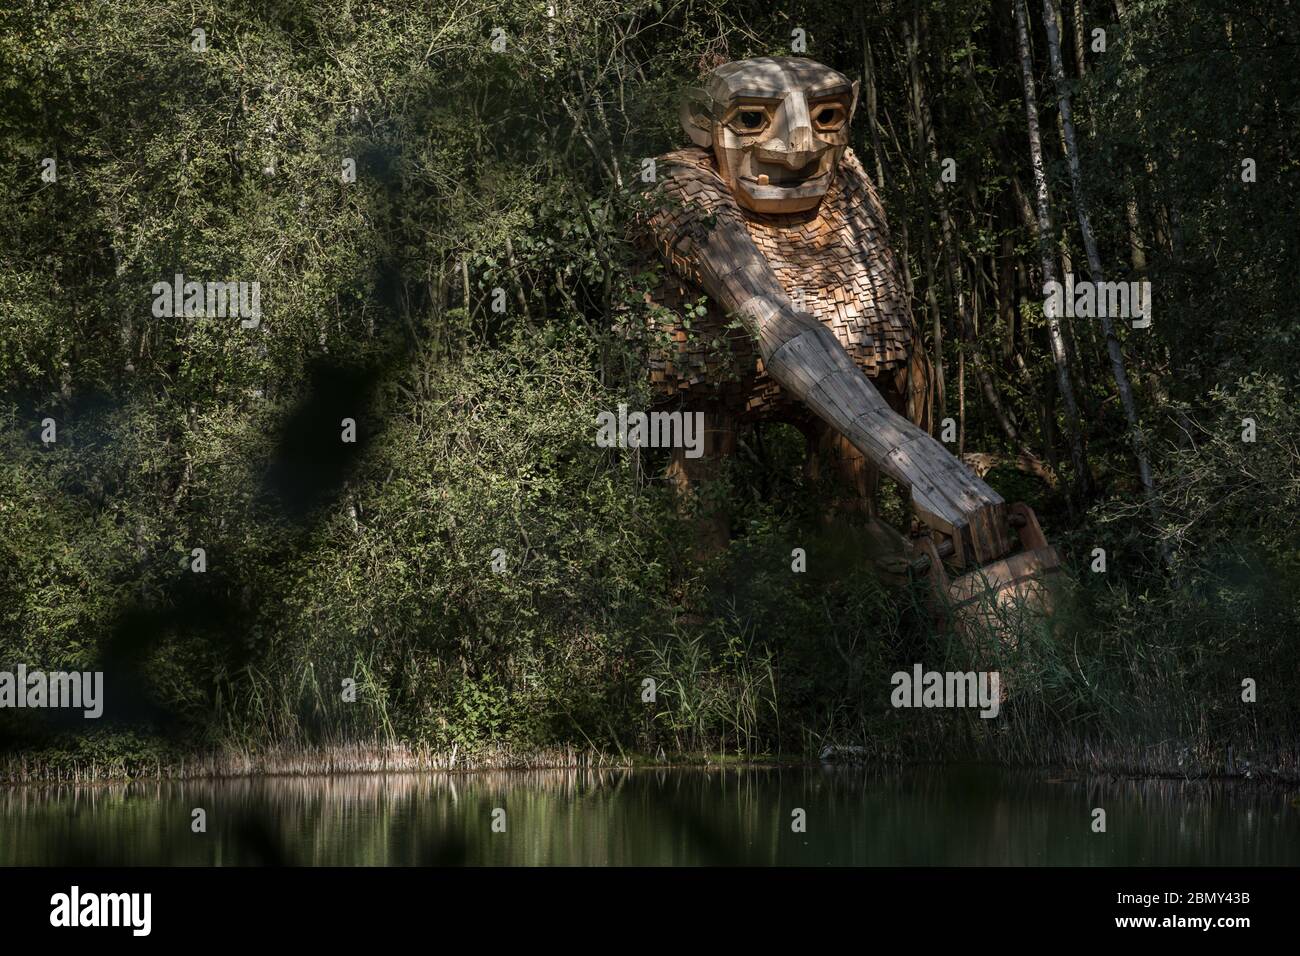 Friendly trolls in De Schorre park in Boom, Belgium by recycling artist Thomas Dambo Stock Photo